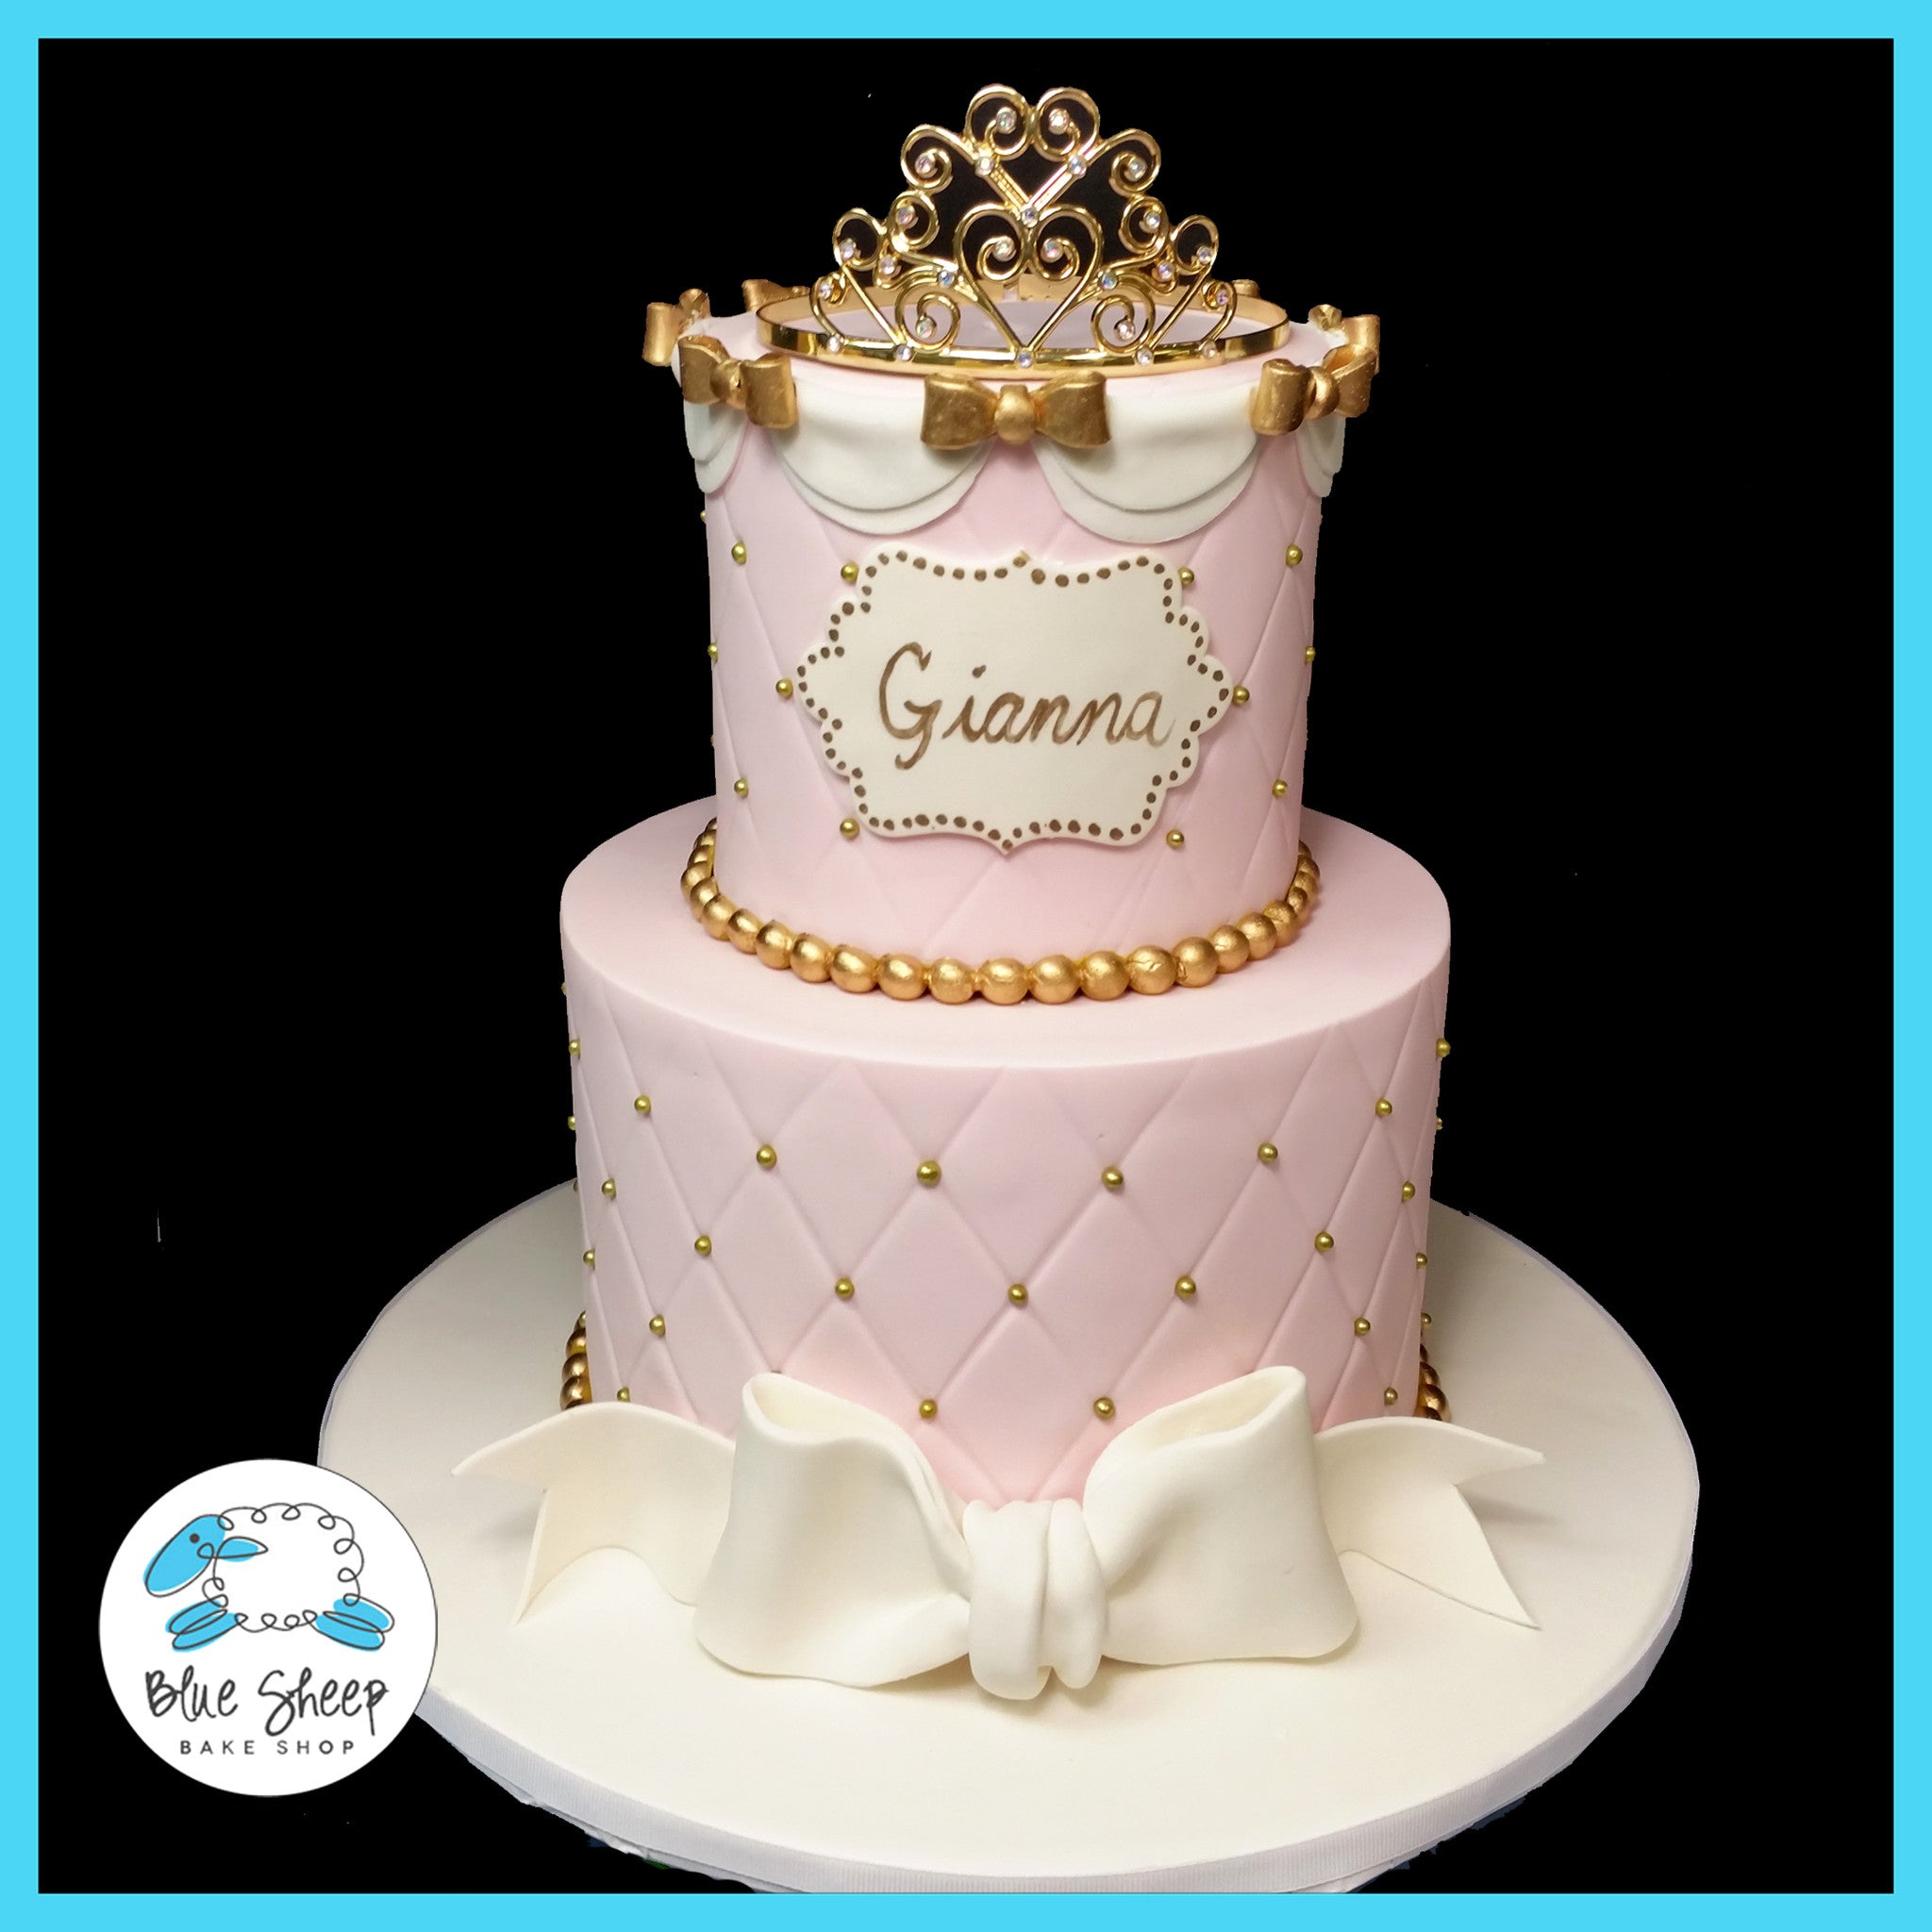 Gianna's PrincessPink and Gold 1st Birthday Cake | Blue Sheep Bake Shop